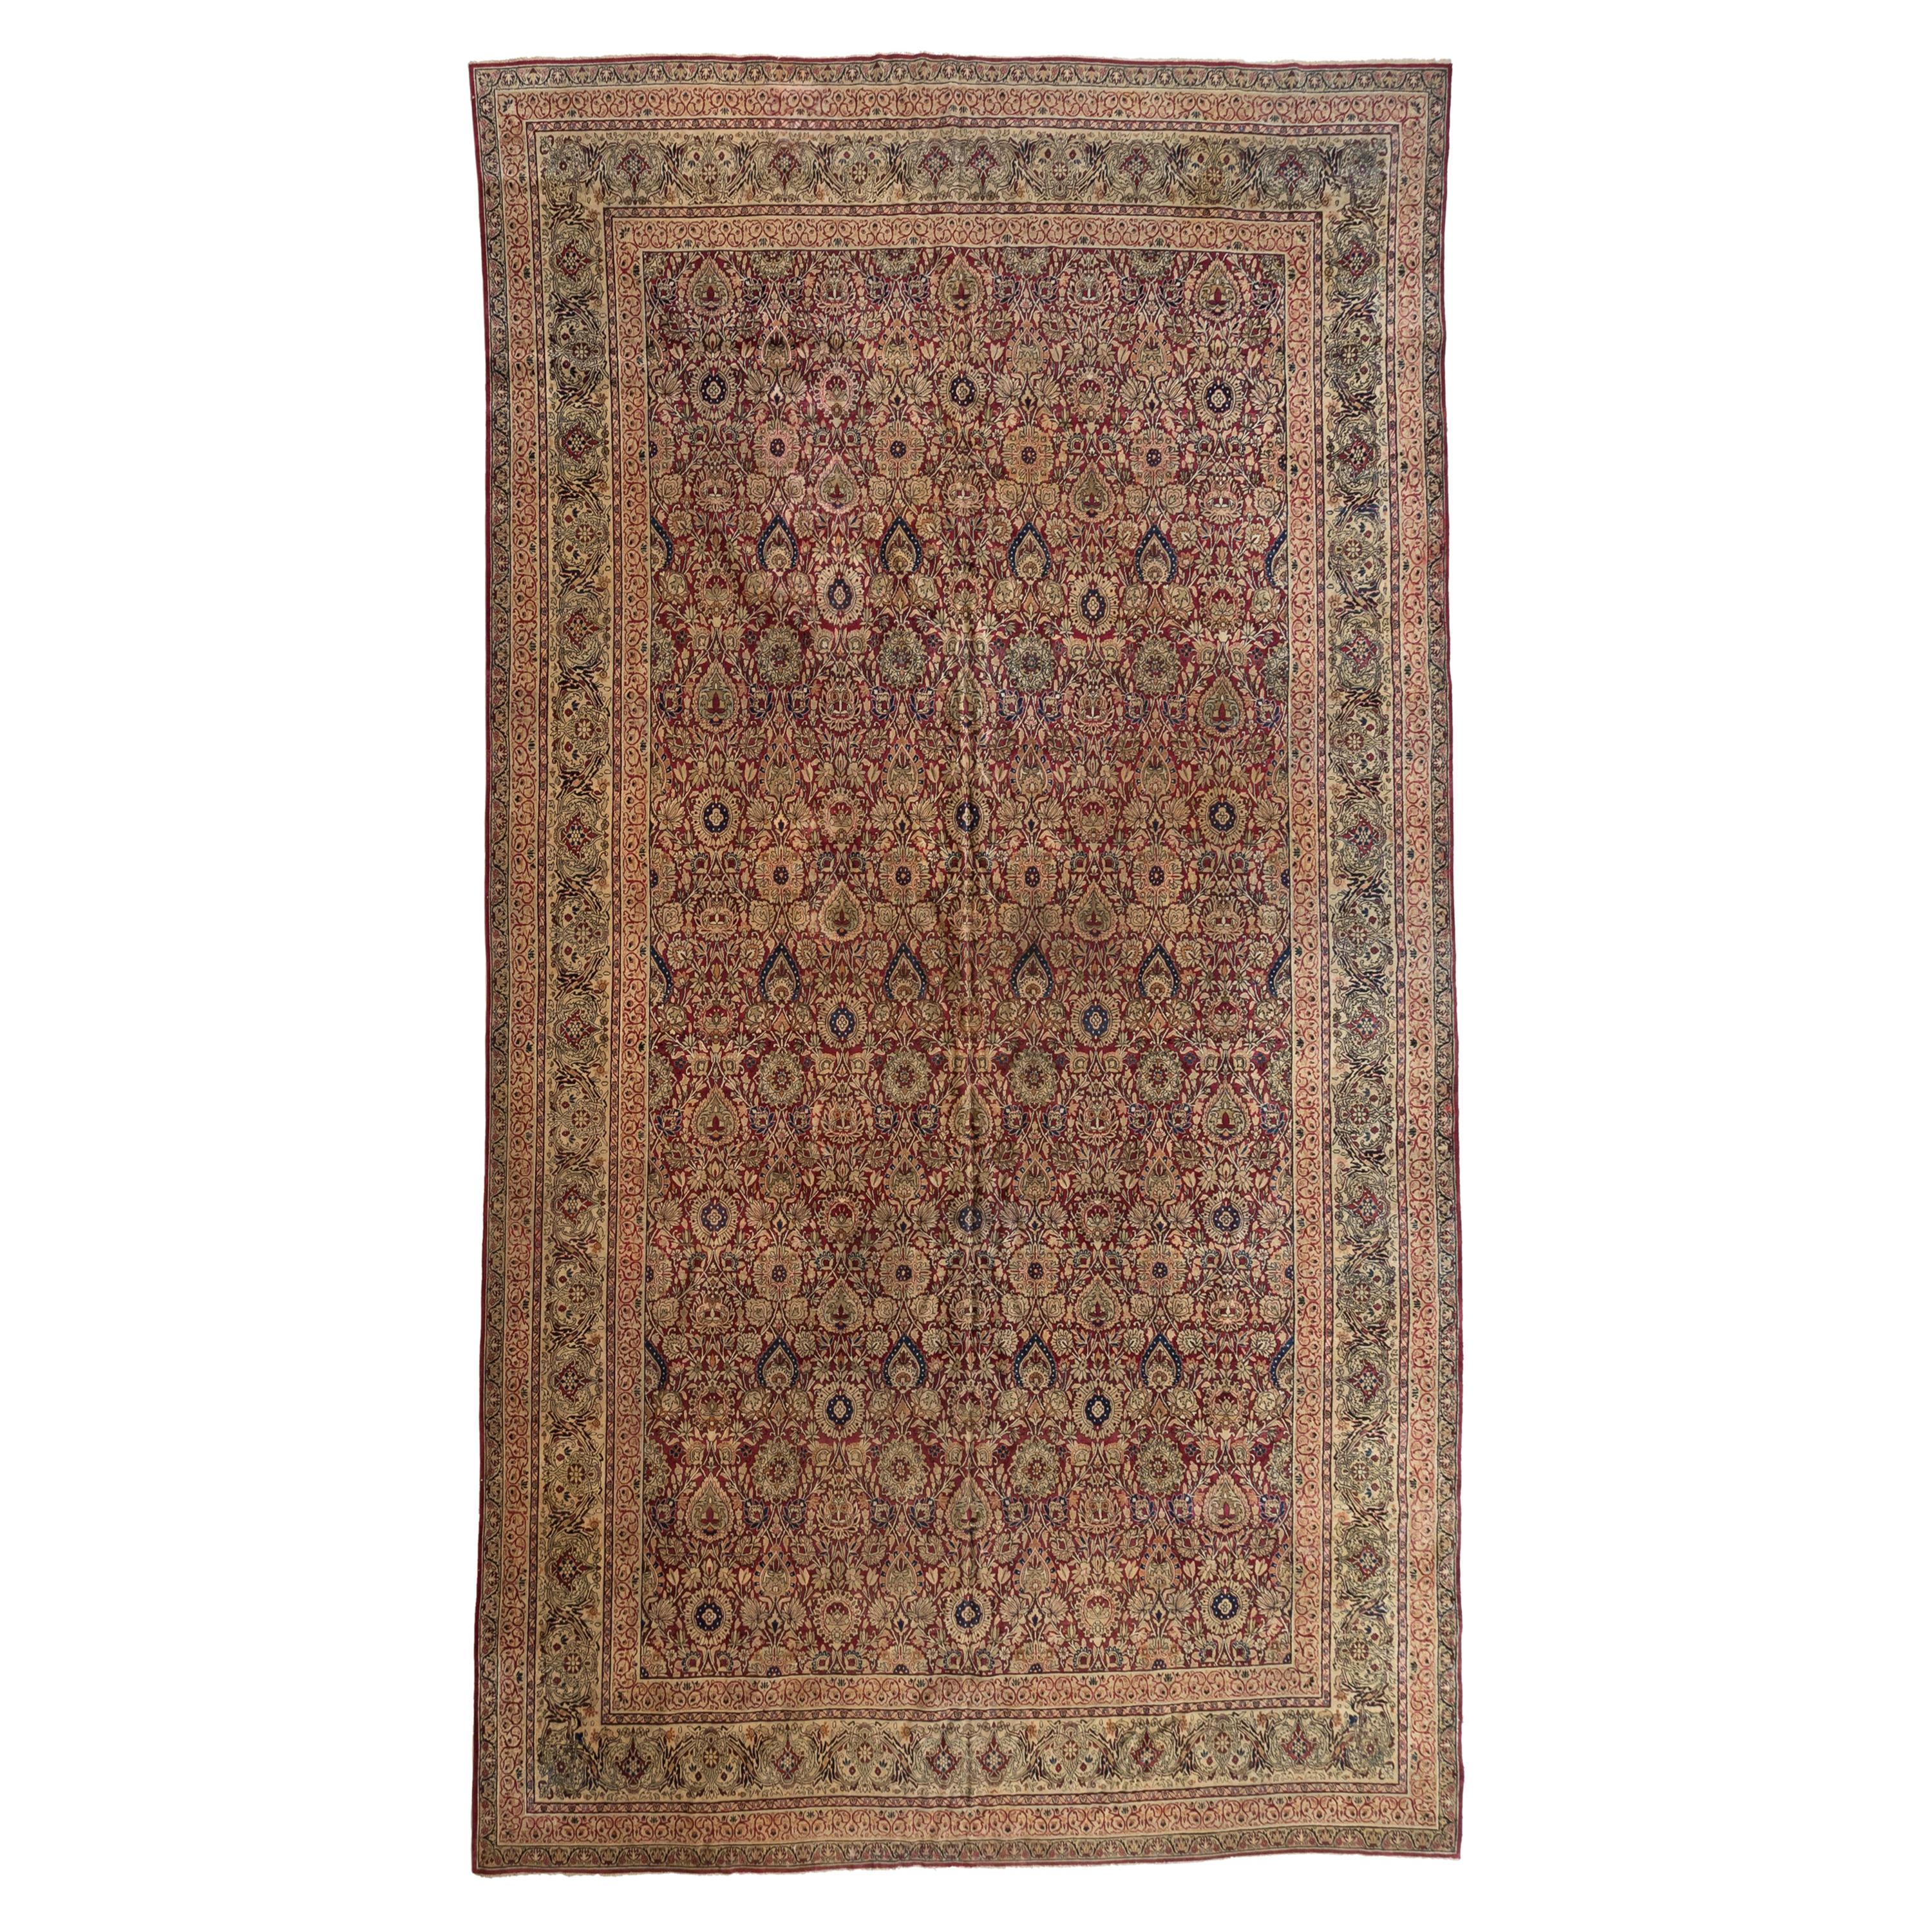 Antique Persian Floral Lavar Rug, circa 1880s-1900s For Sale